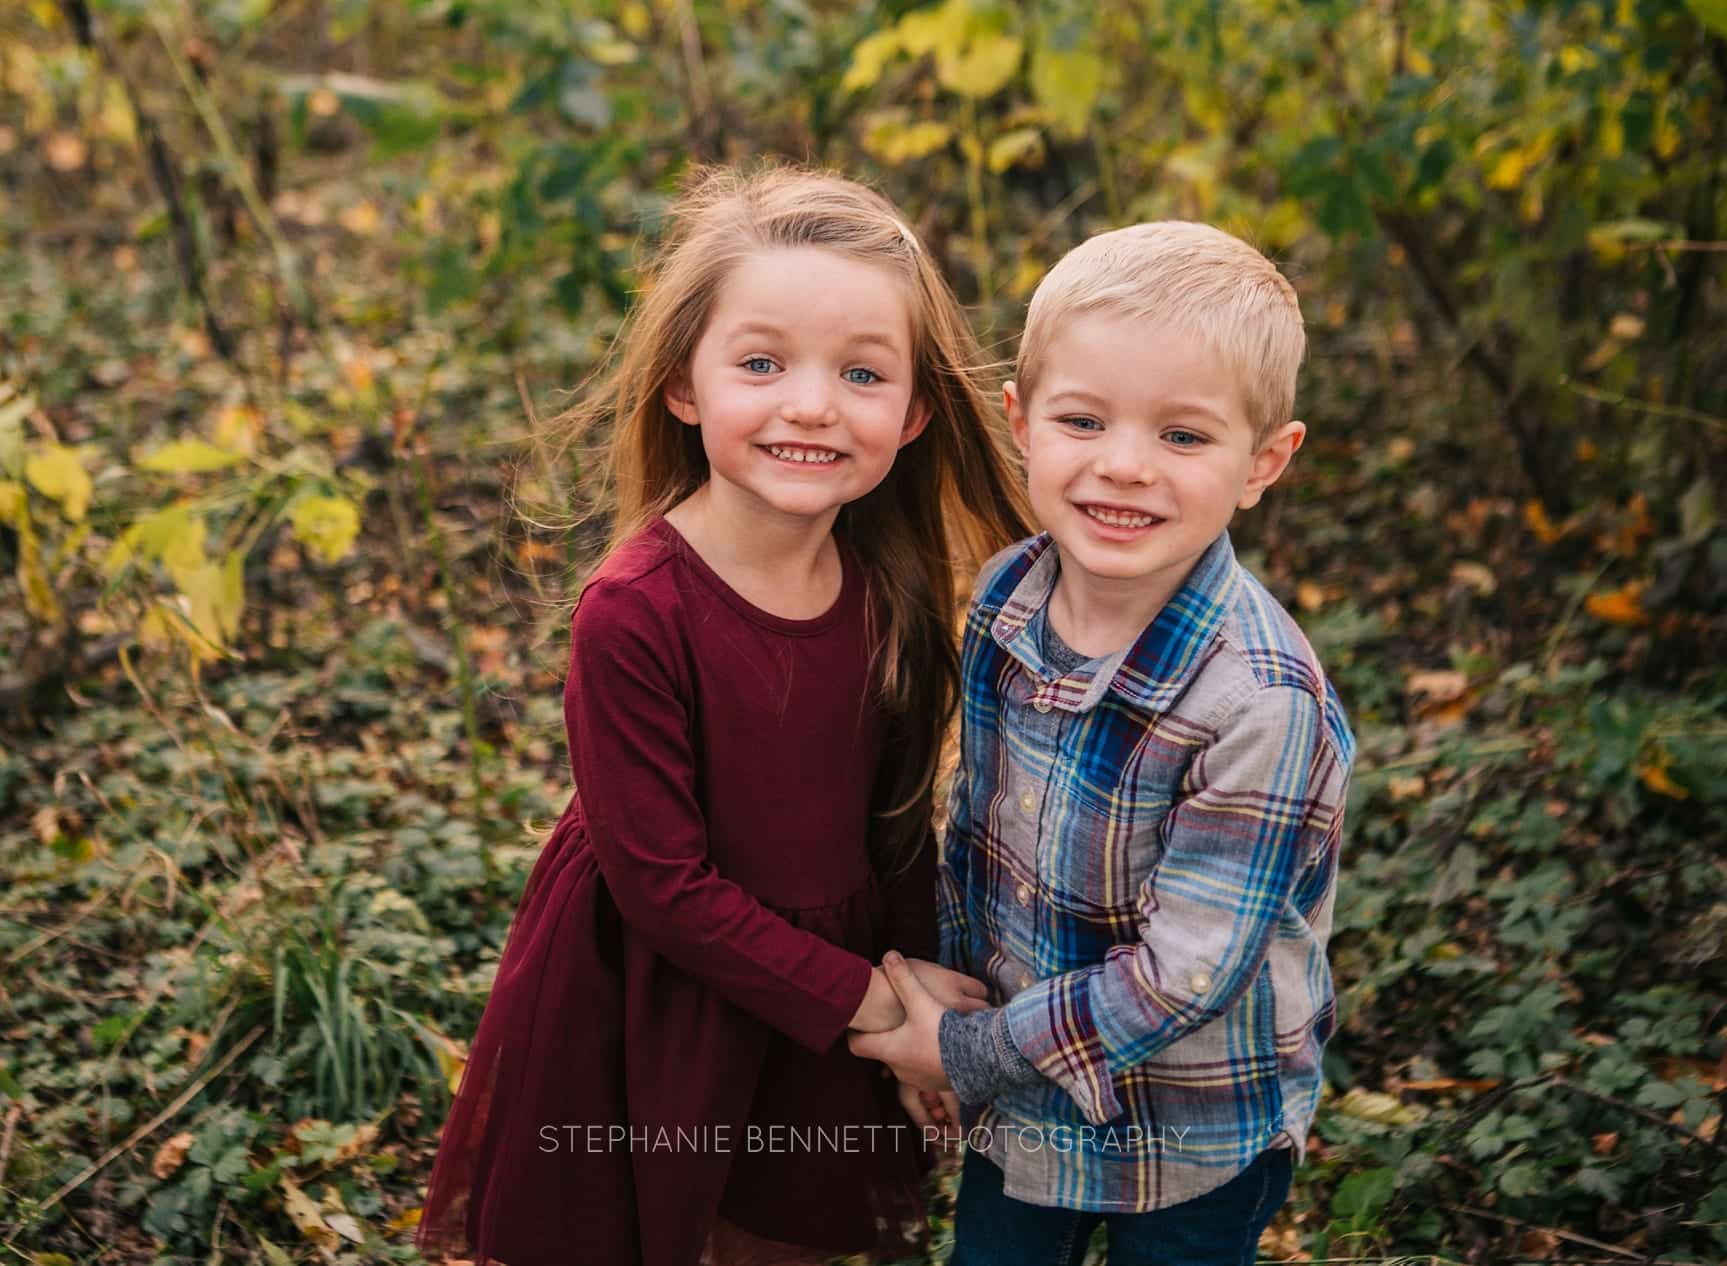 New Prauge family photography session | Northfield MN Photographer Stephanie Bennett 